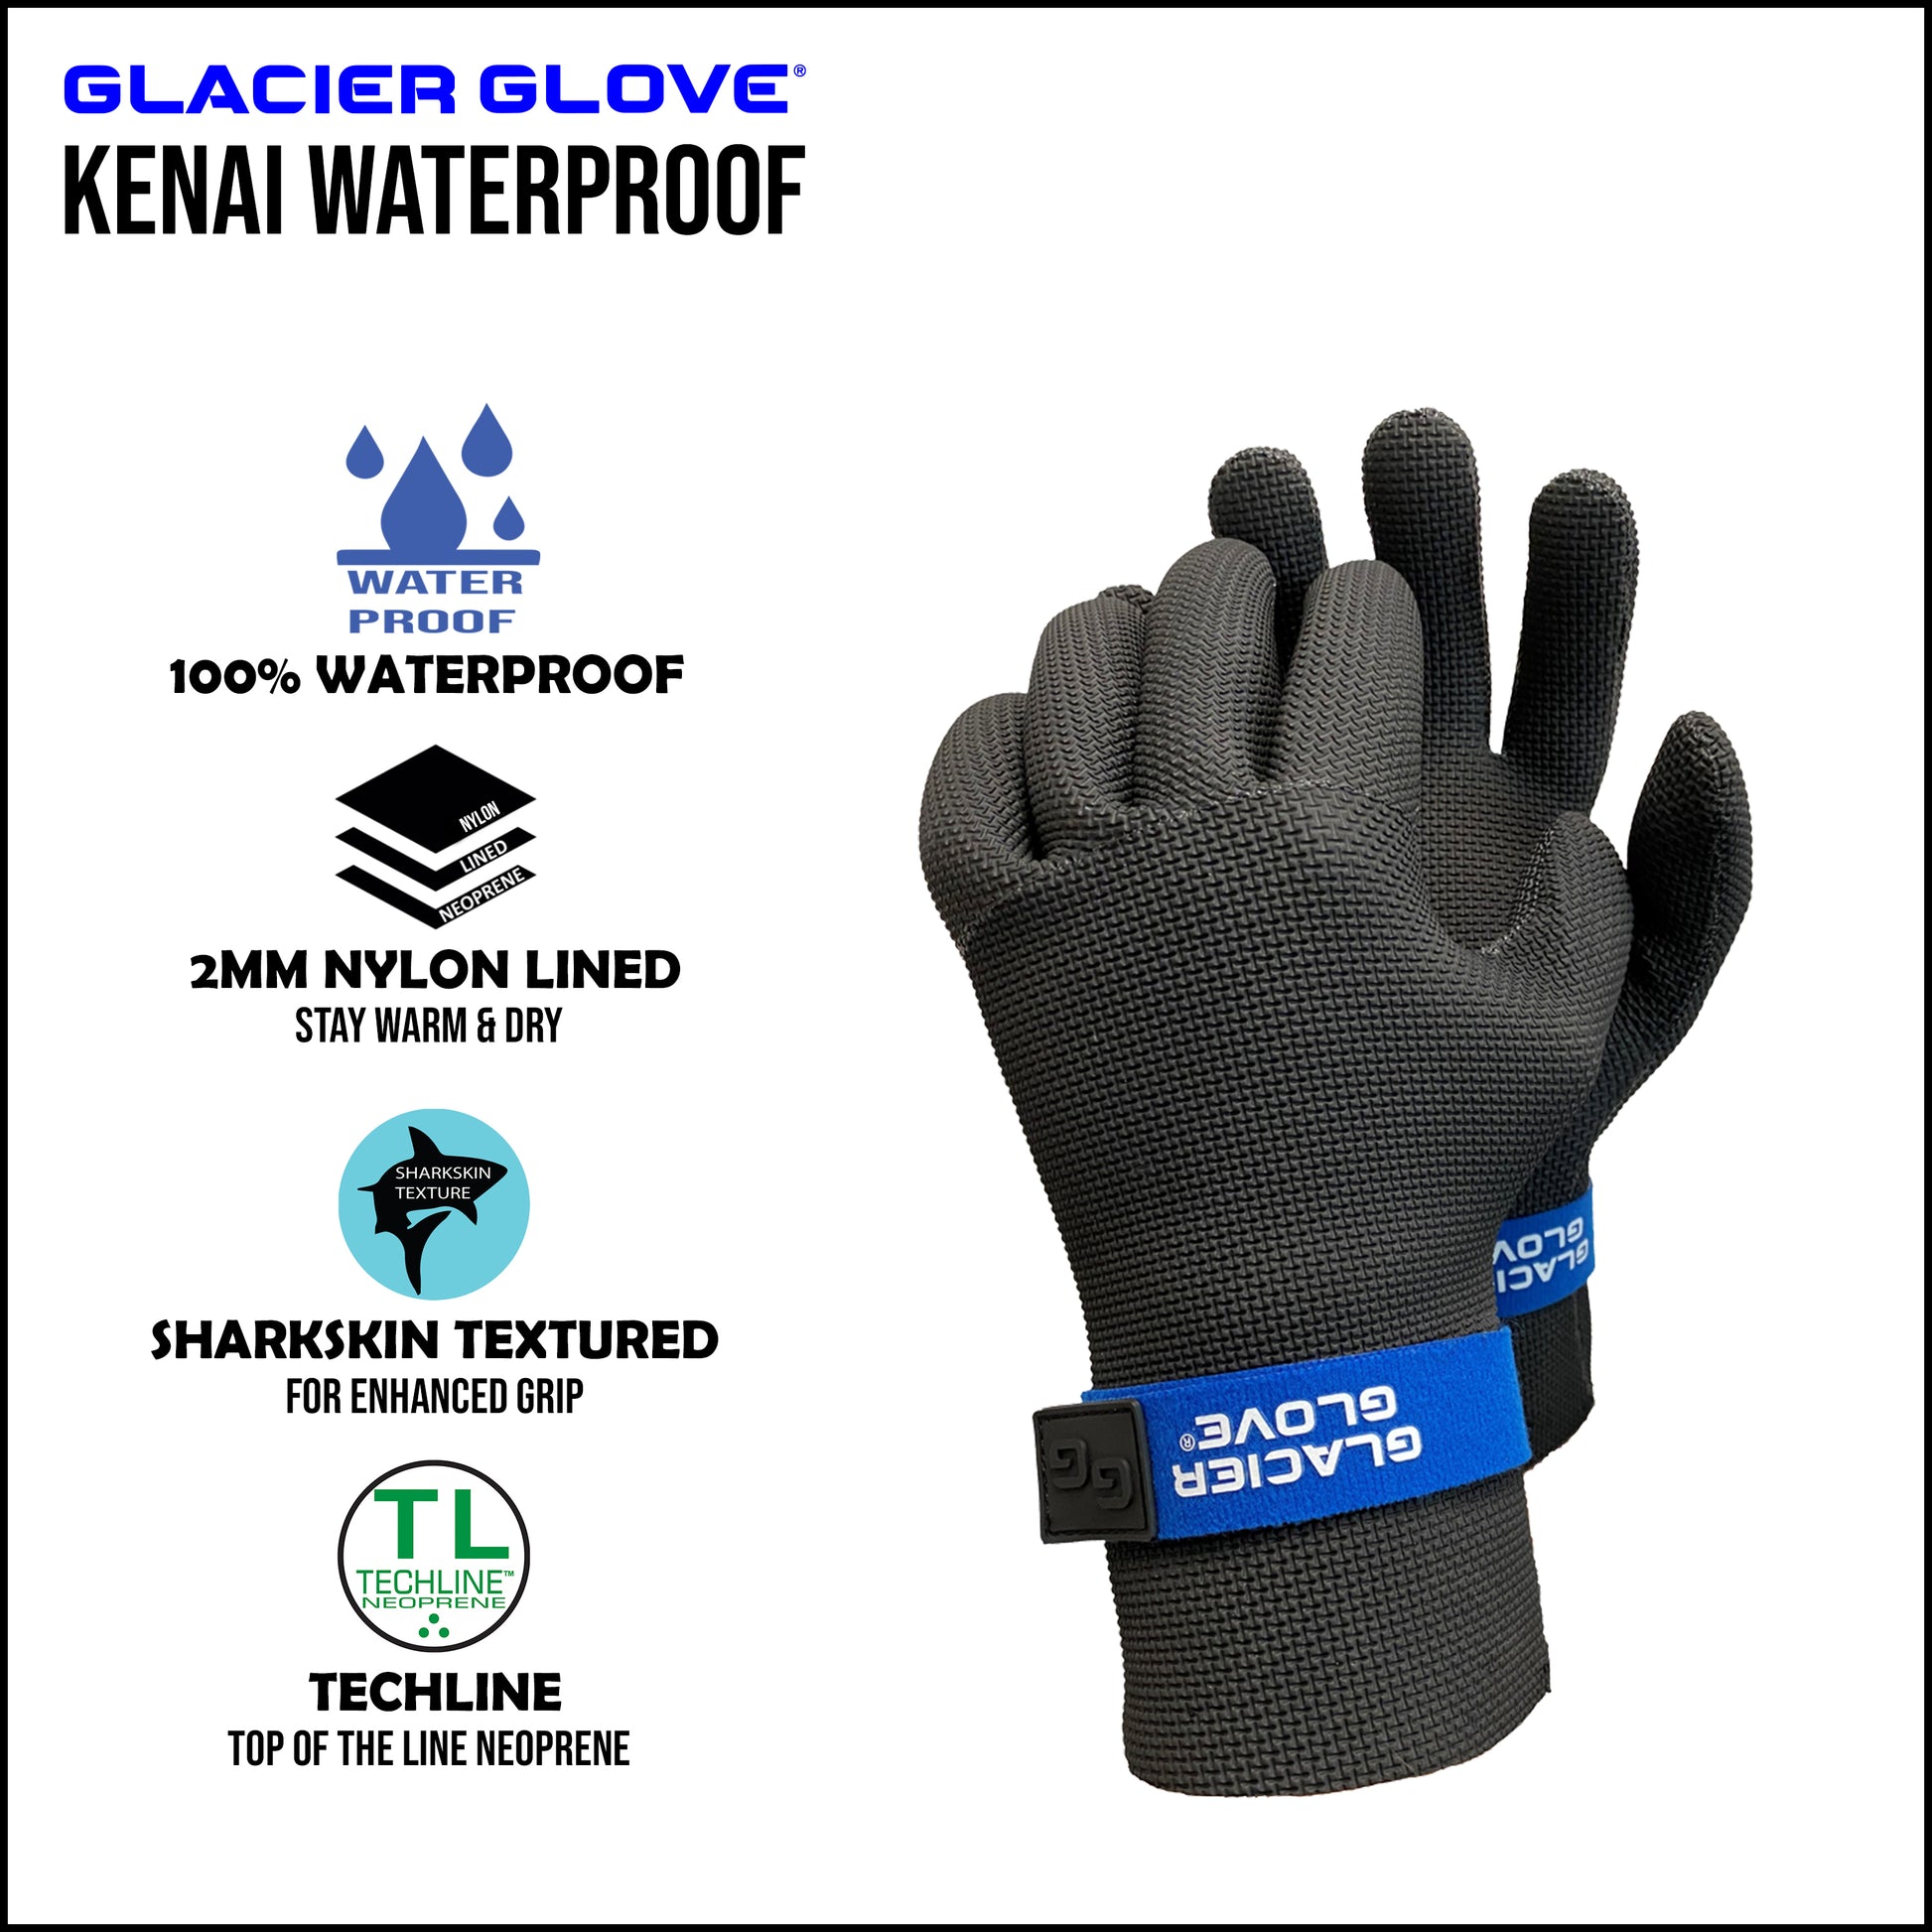 Buy Drasry Neoprene Touchscreen Ice Fishing Gloves Winter Cold